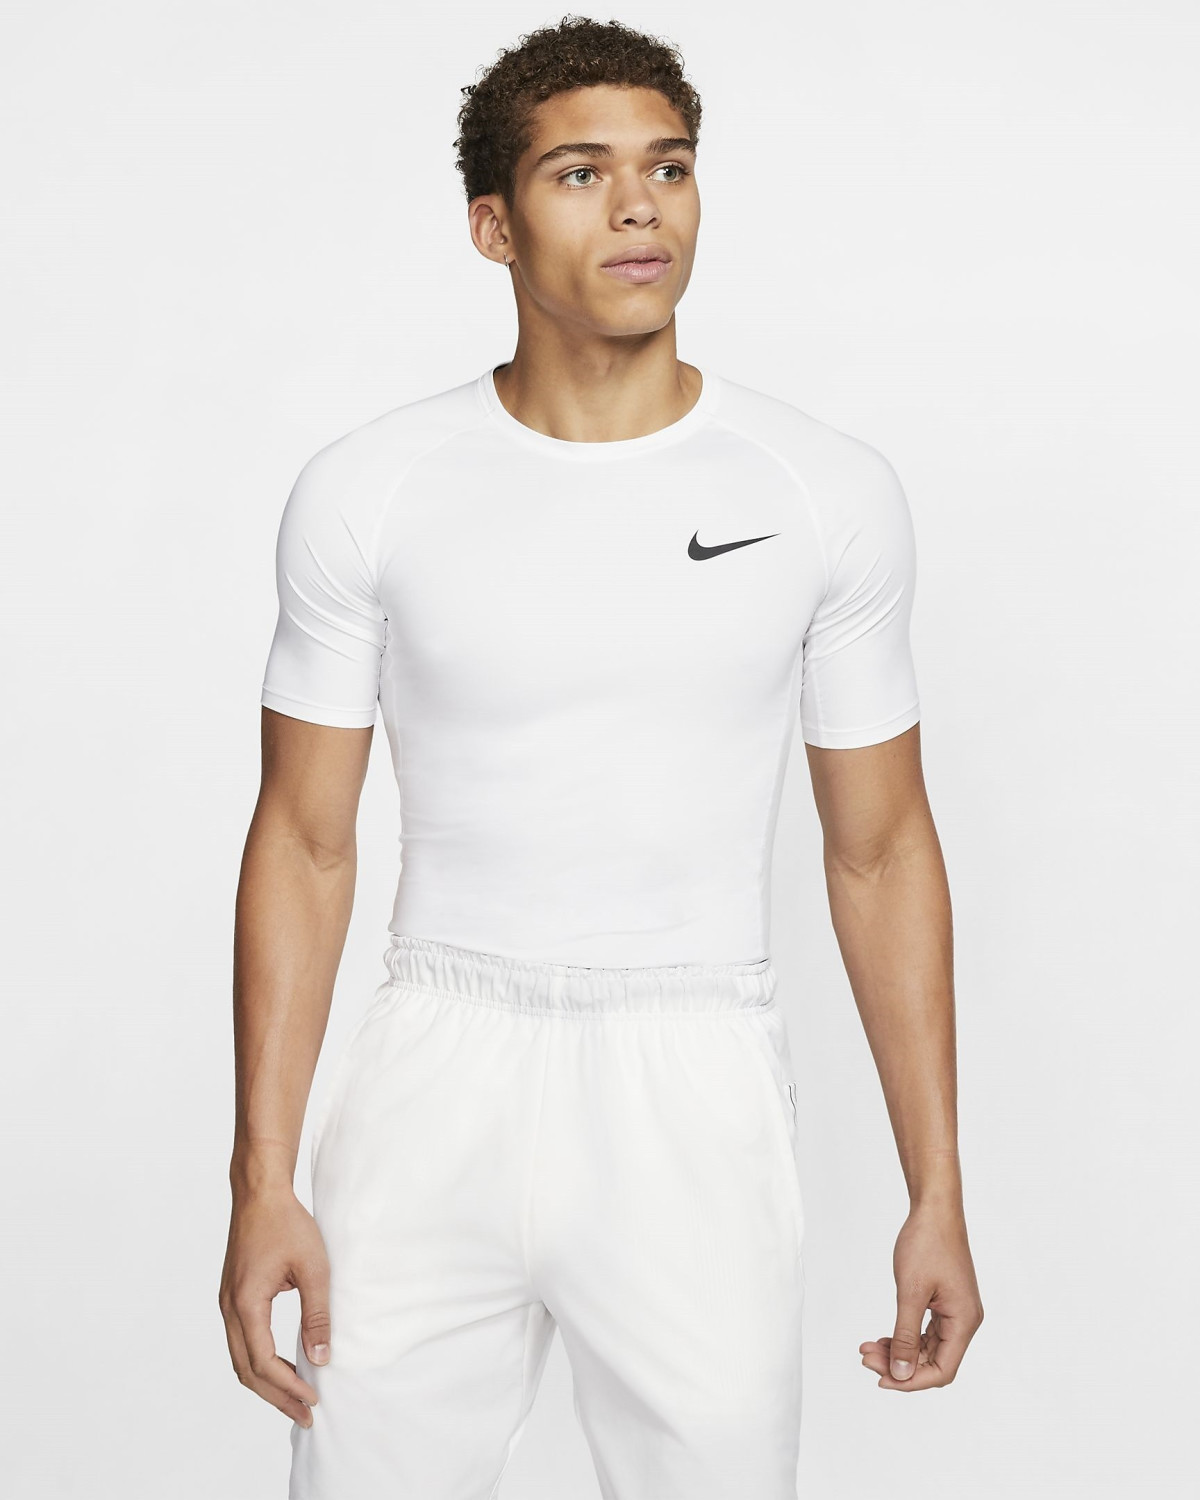 Nike Pro T-Shirt (BV5631) white/black ab 14,38 â¬ | Preisvergleich bei idealo.de